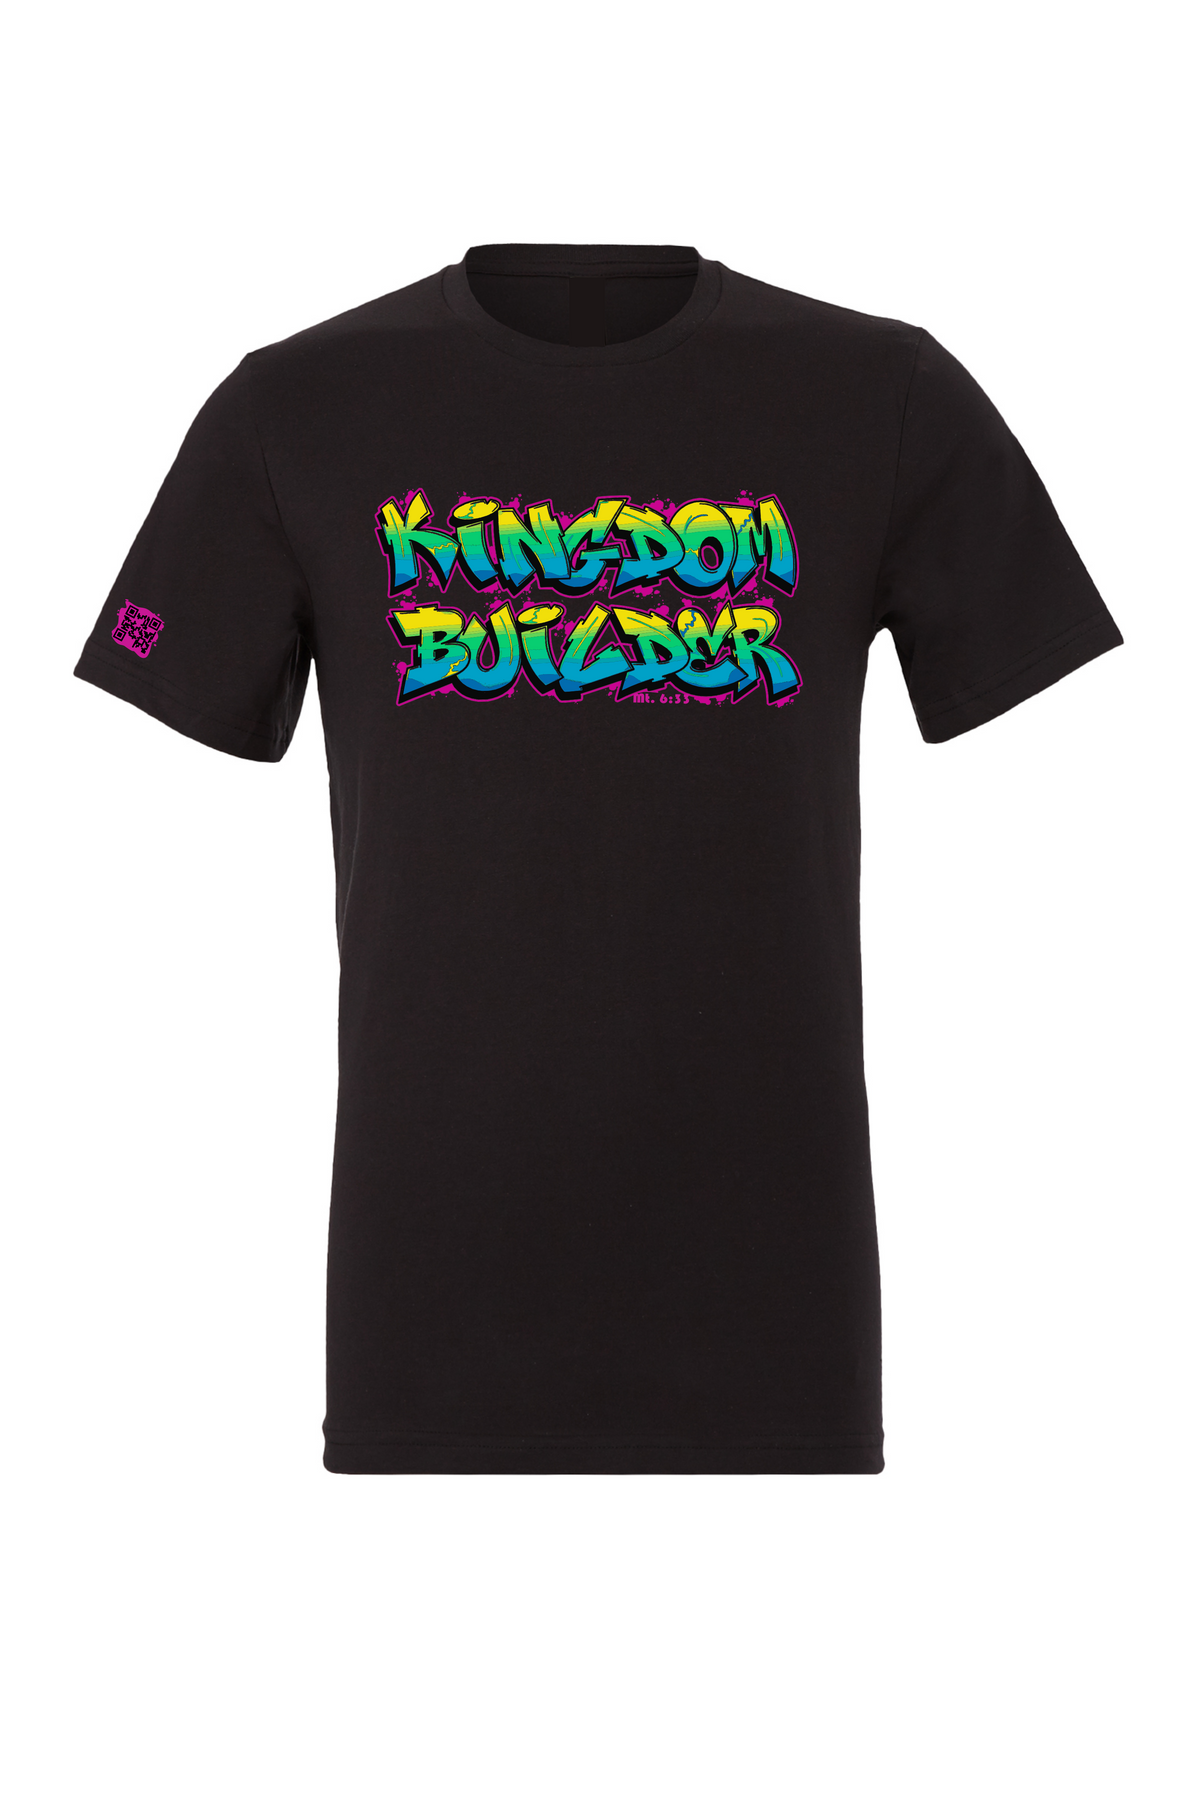 Kingdom Builder - Black T-Shirt - Colored Graphics